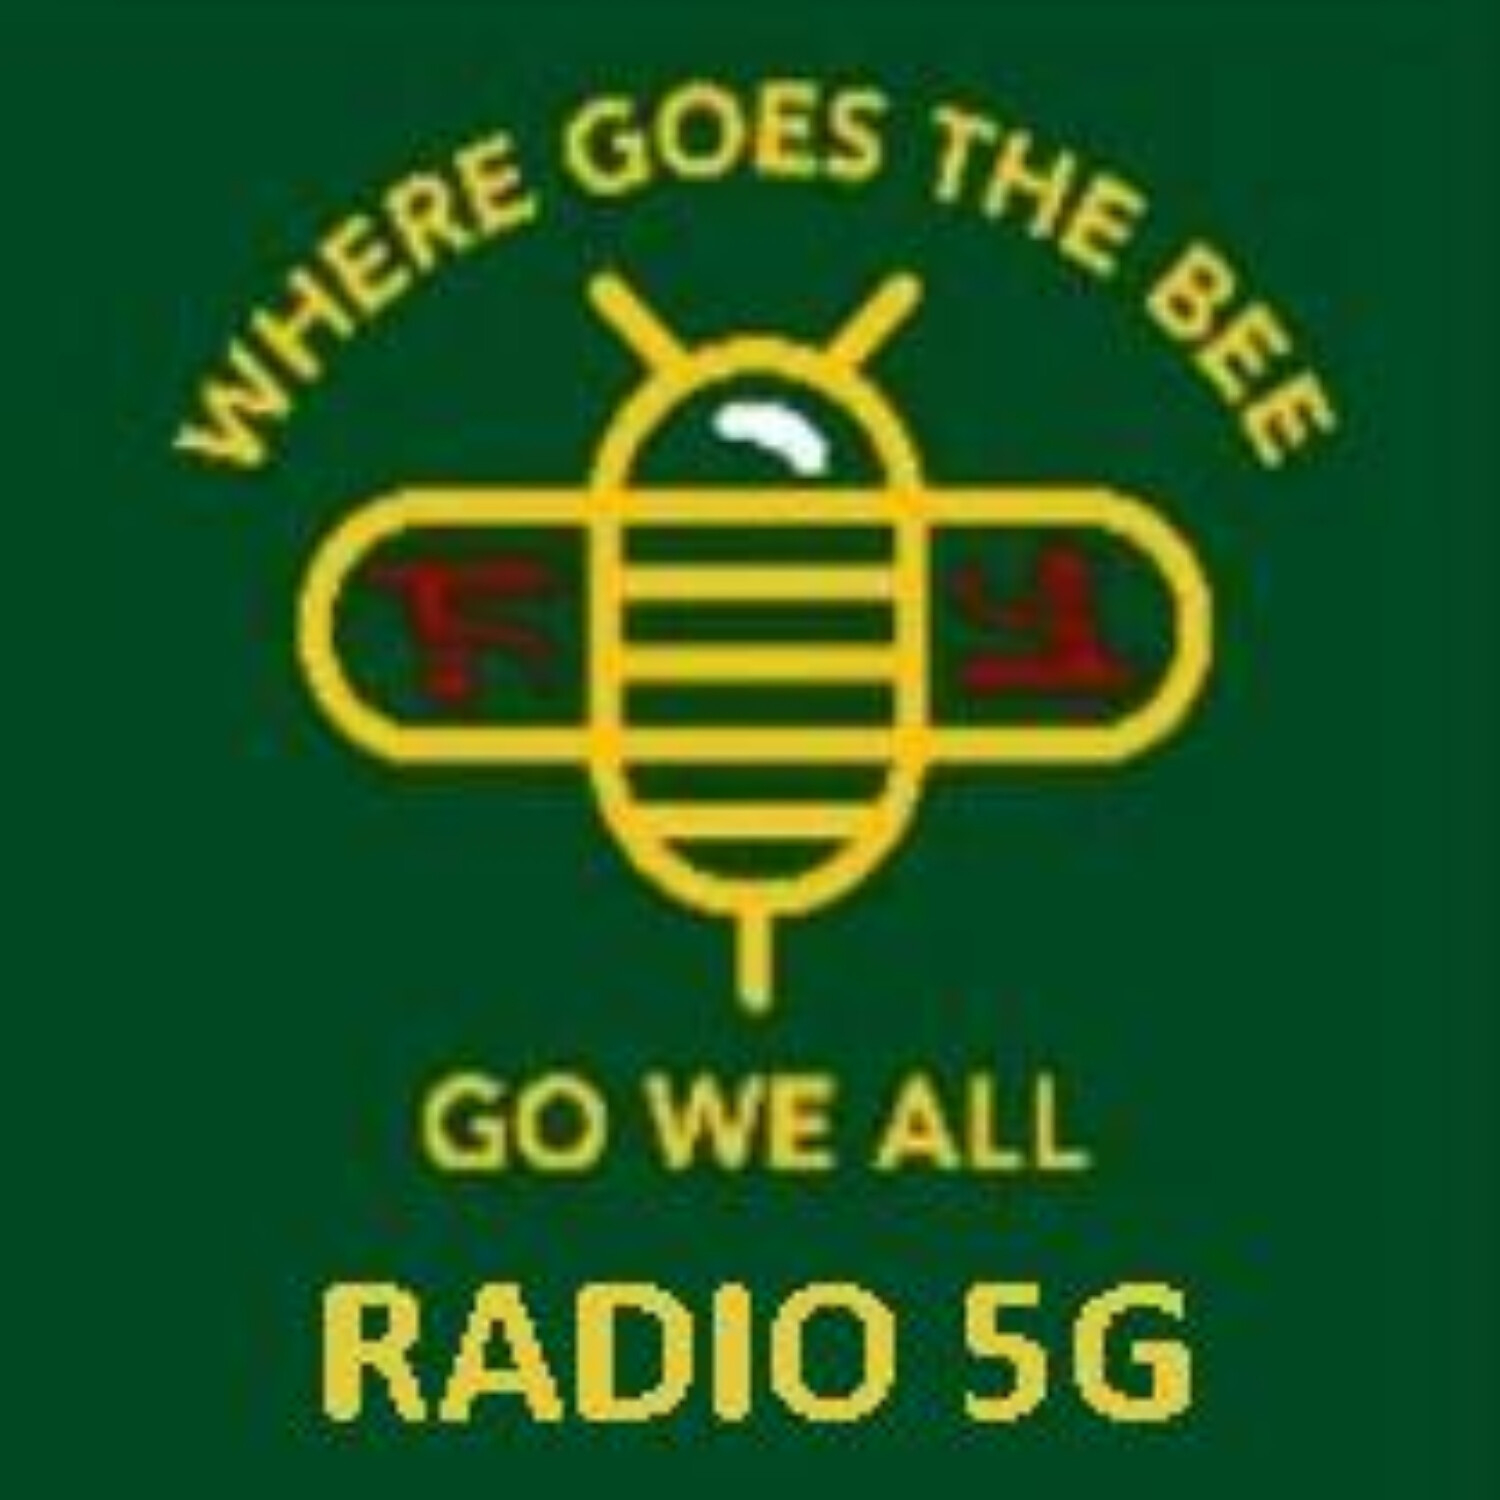 “RADIO 5G” 12/08/21 - Ken Rohla, Mark Steele & Nicholas Martin on Human Consciousness its Perceptions and Control